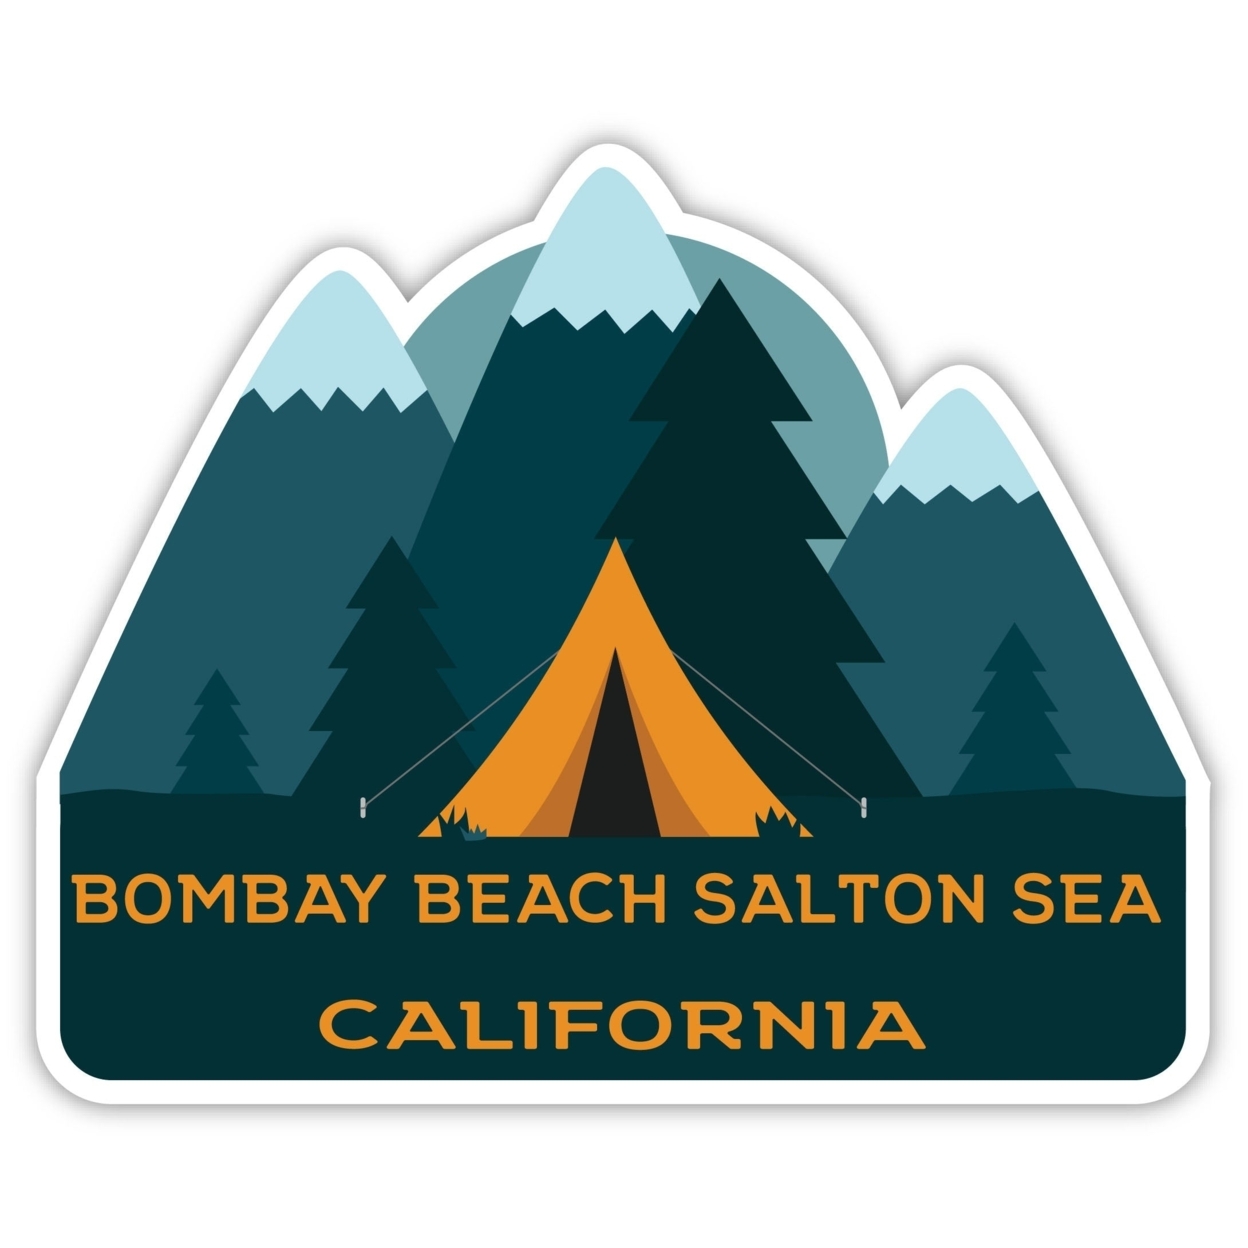 Bombay Beach Salton Sea California Souvenir Decorative Stickers (Choose Theme And Size) - Single Unit, 4-Inch, Tent